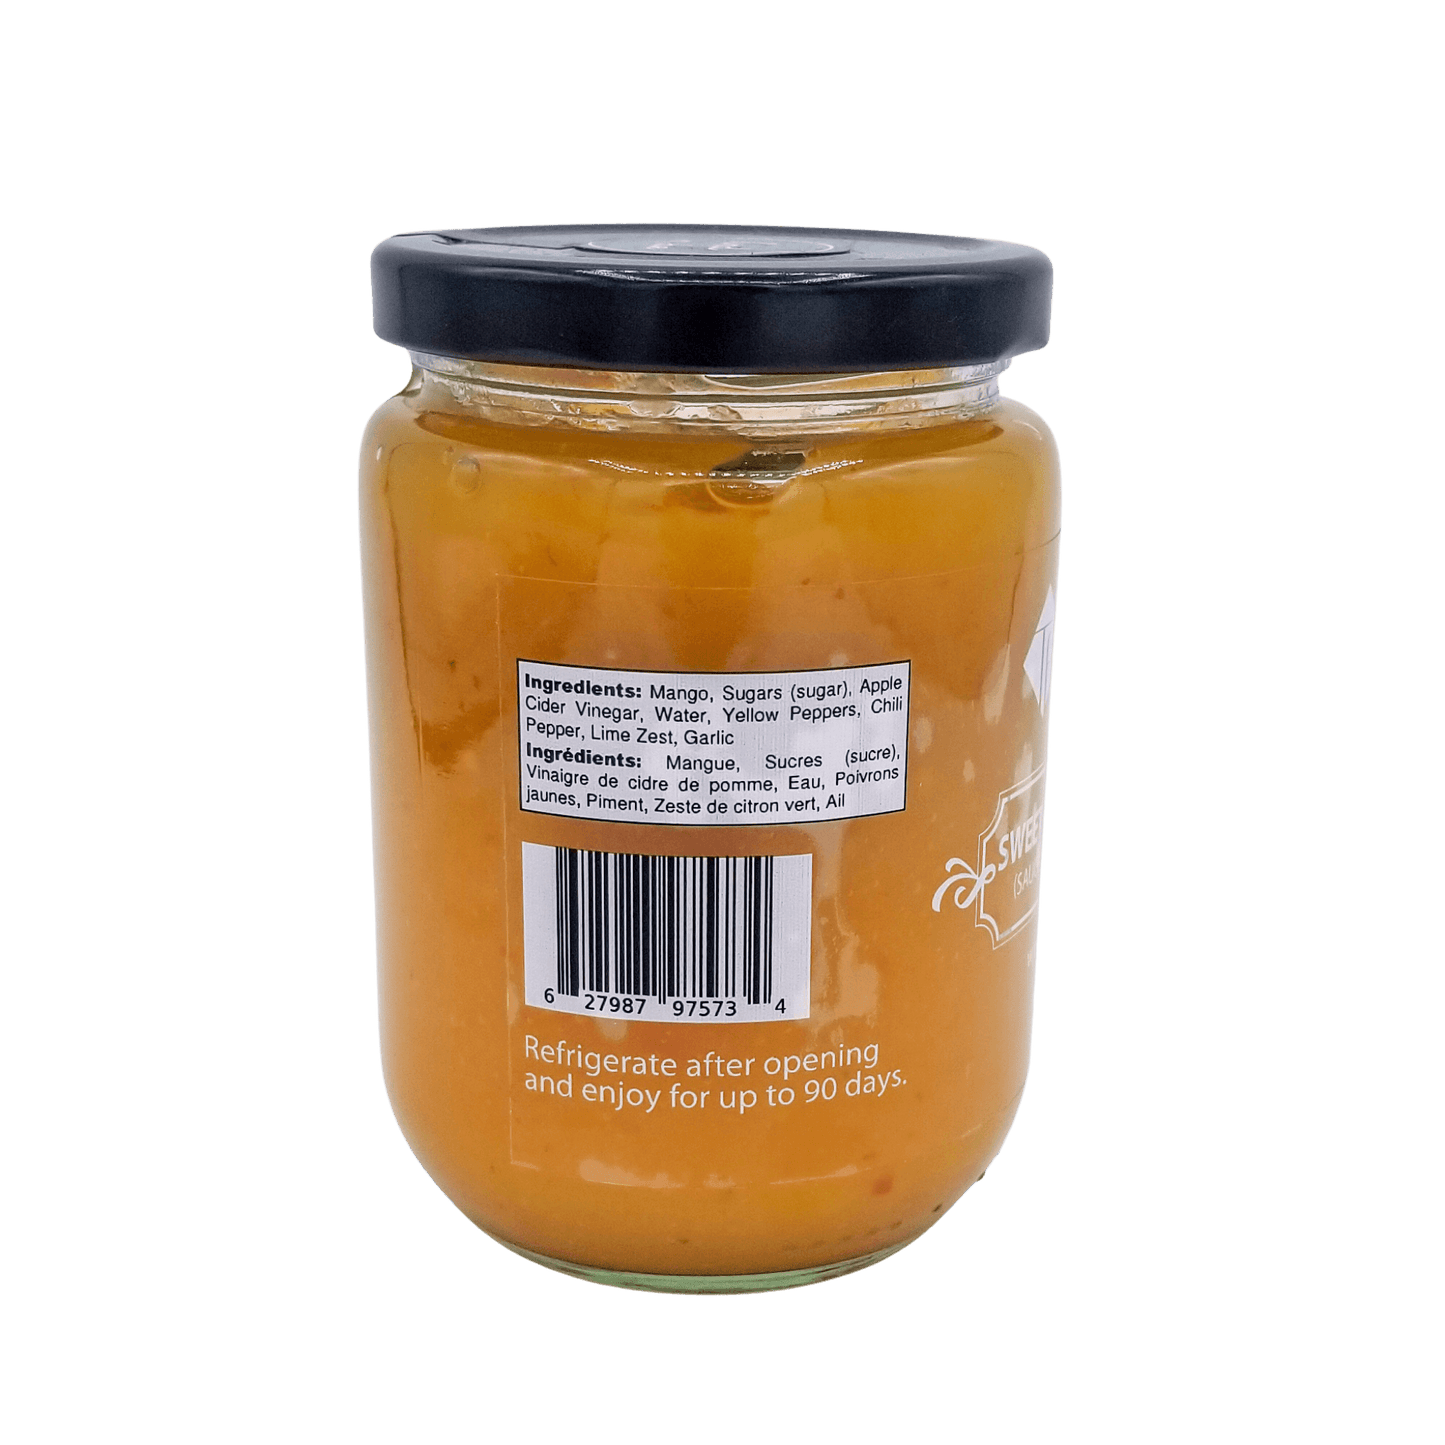 Sweet Mango Chili Sauce